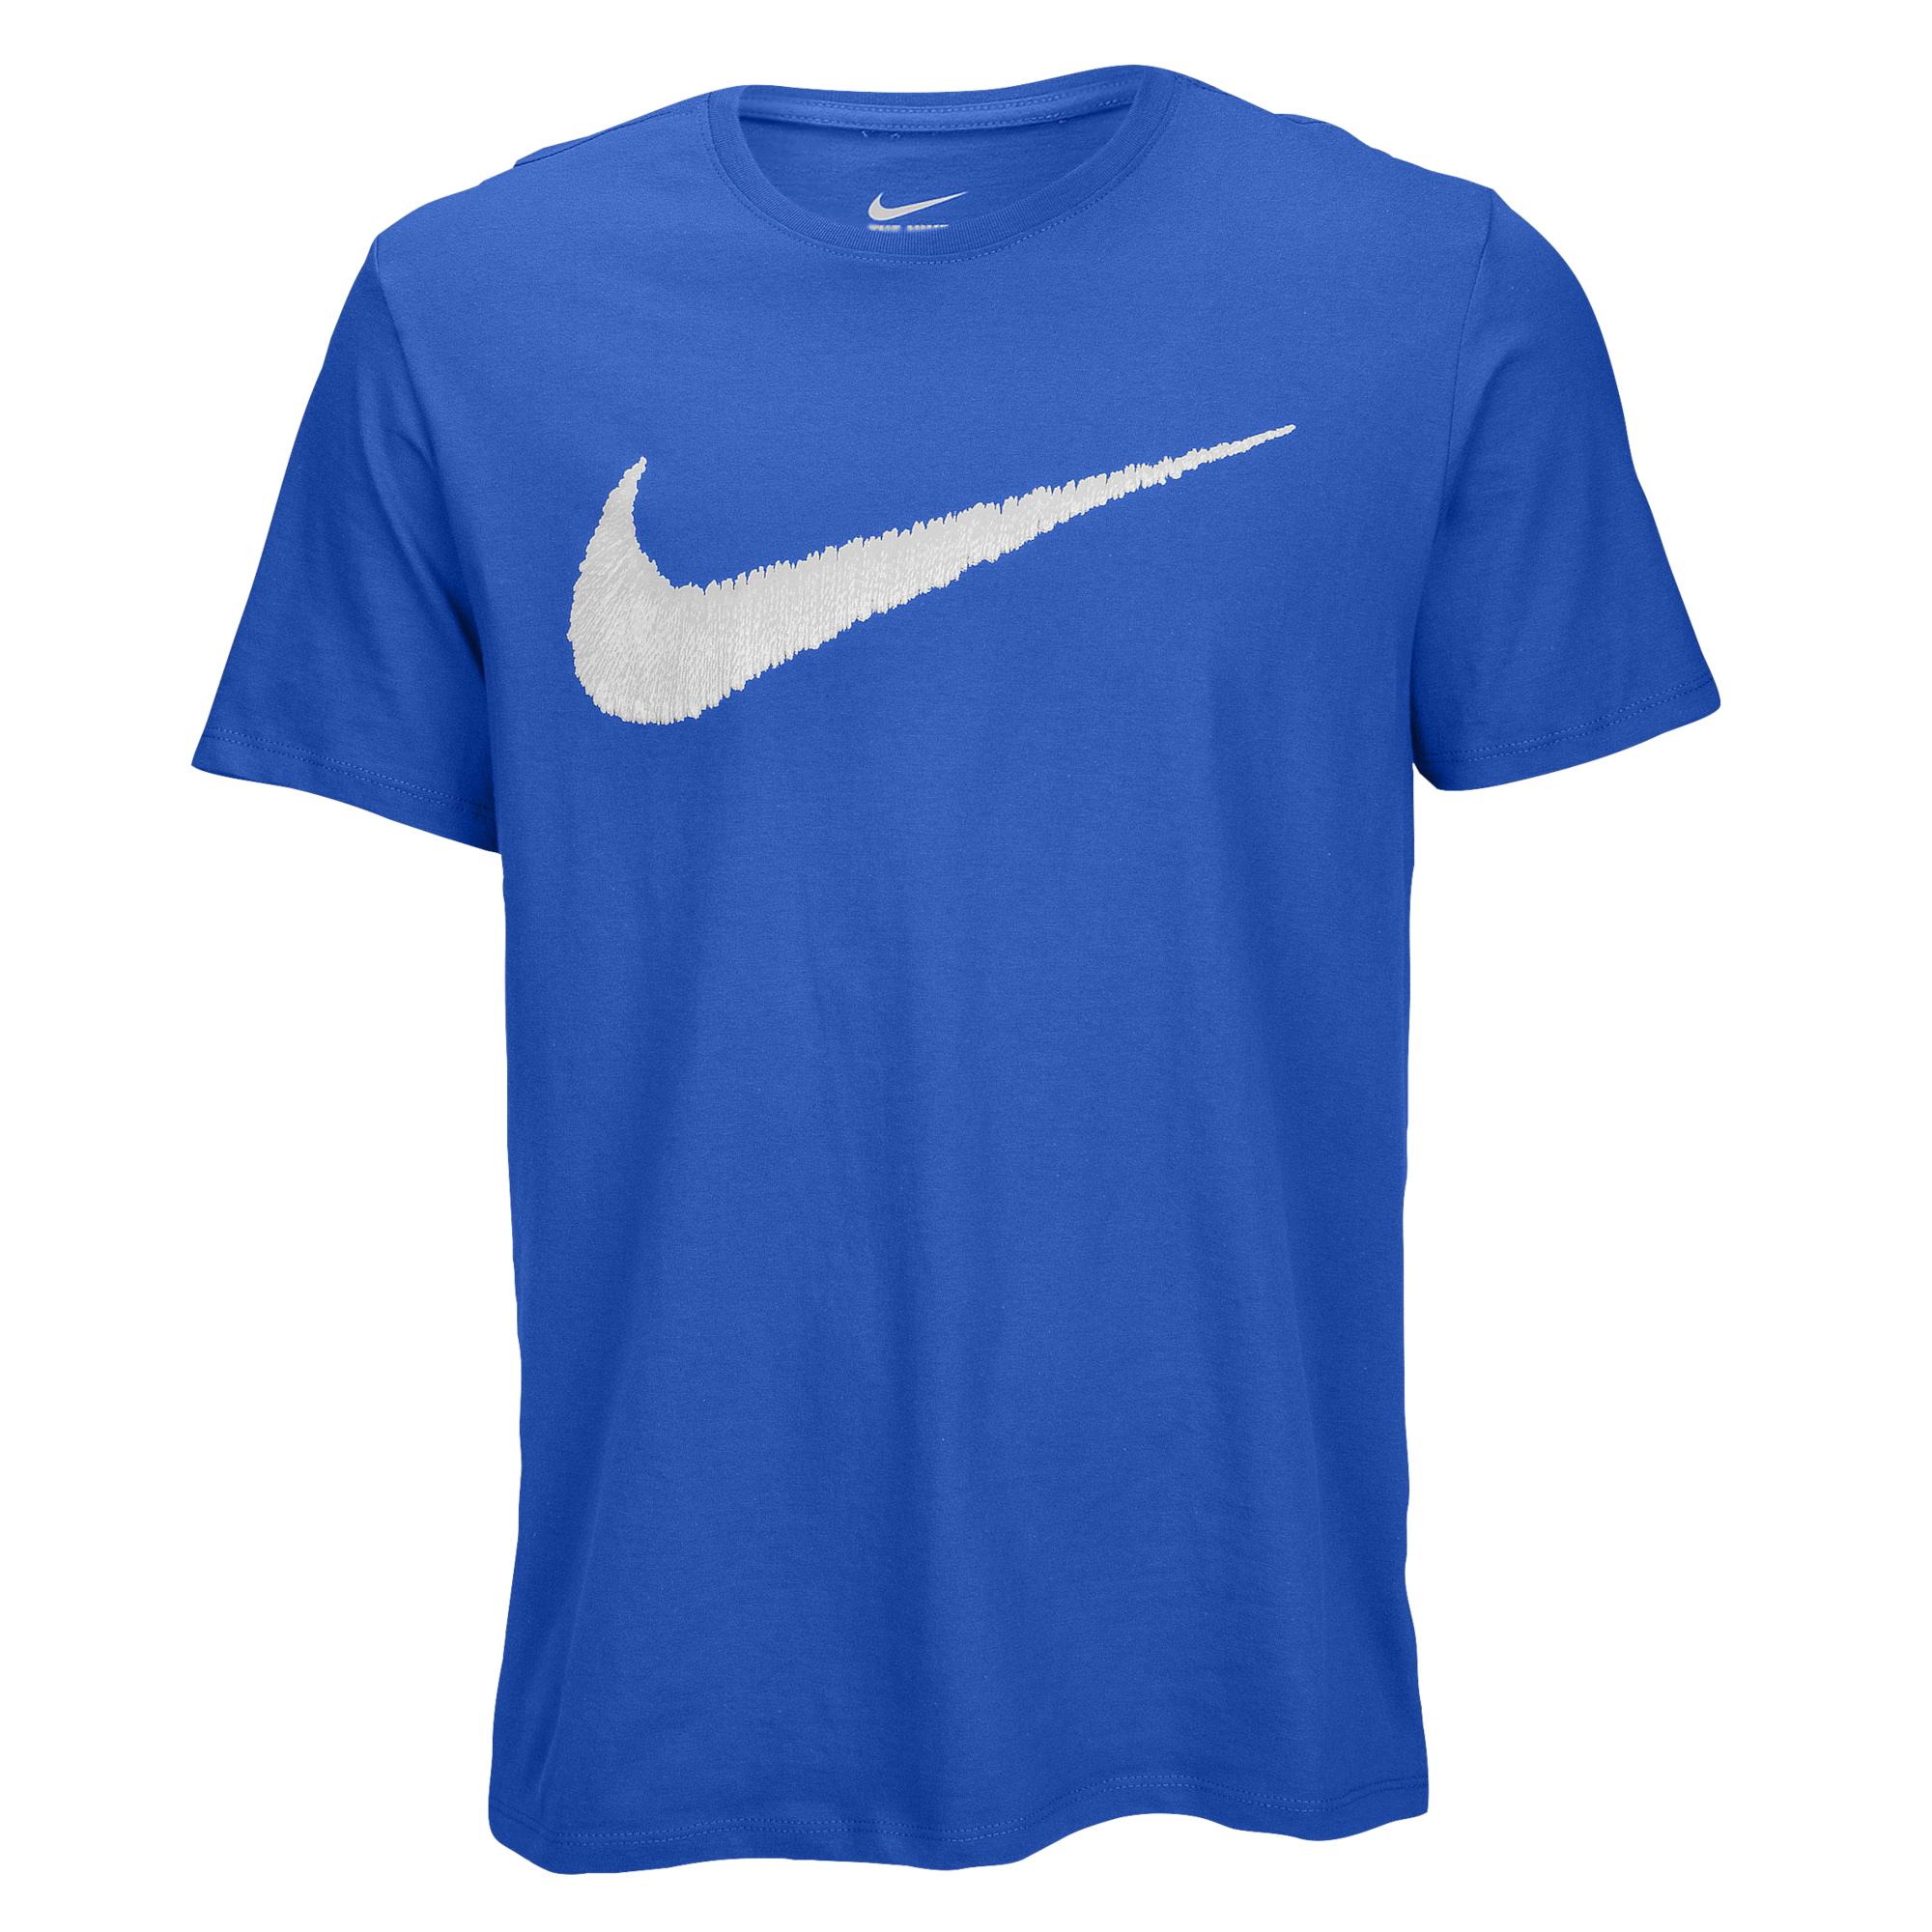 Nike Cotton Hangtag Swoosh Short Sleeve T-shirt in Blue for Men - Lyst